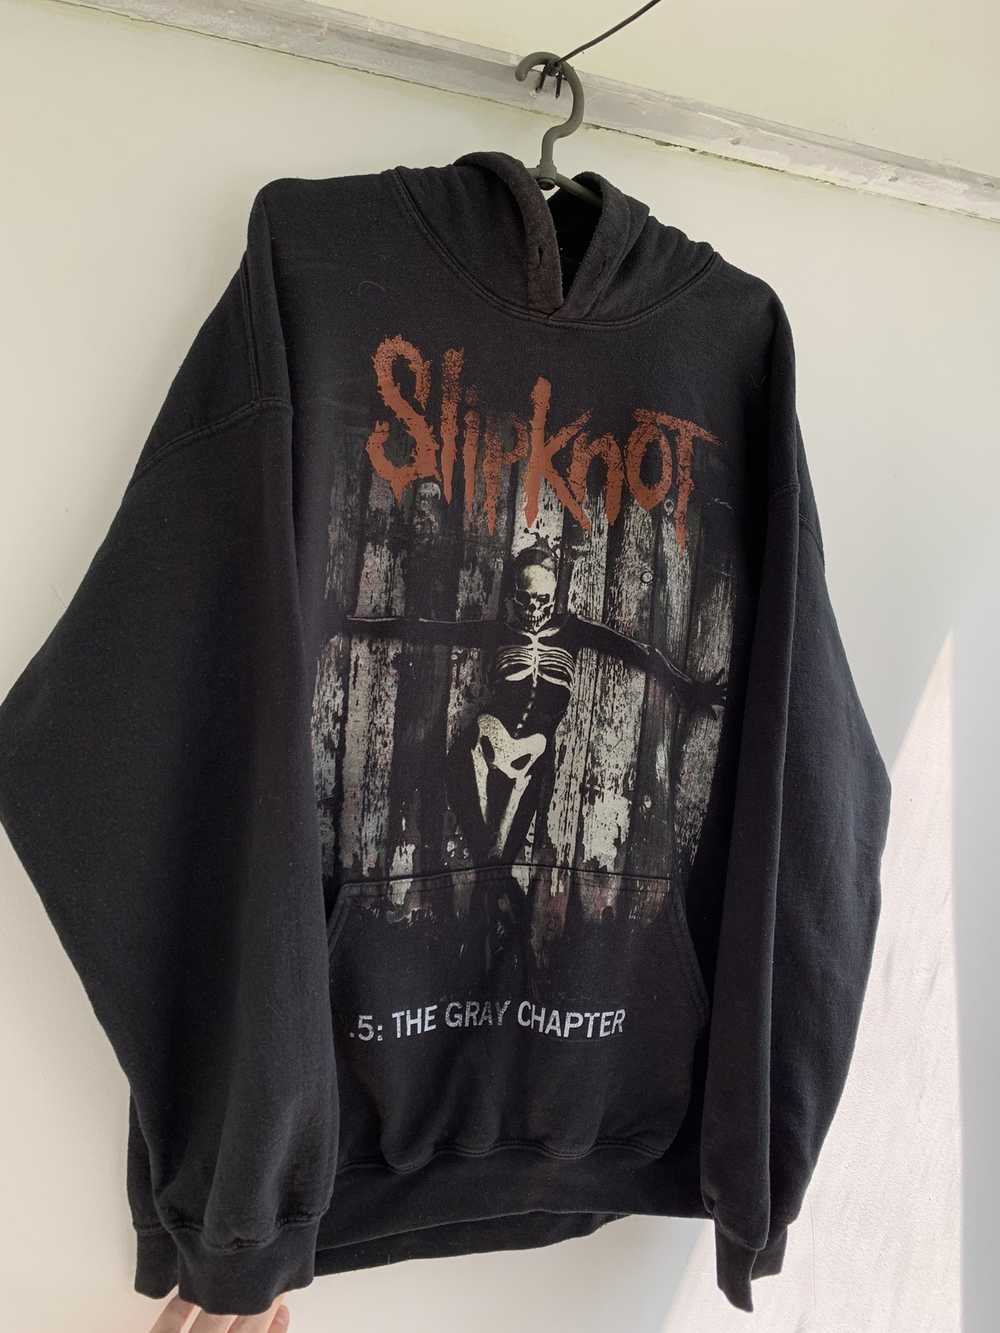 Slipknot Slipknot vintage hoodie the gray chapter - image 4